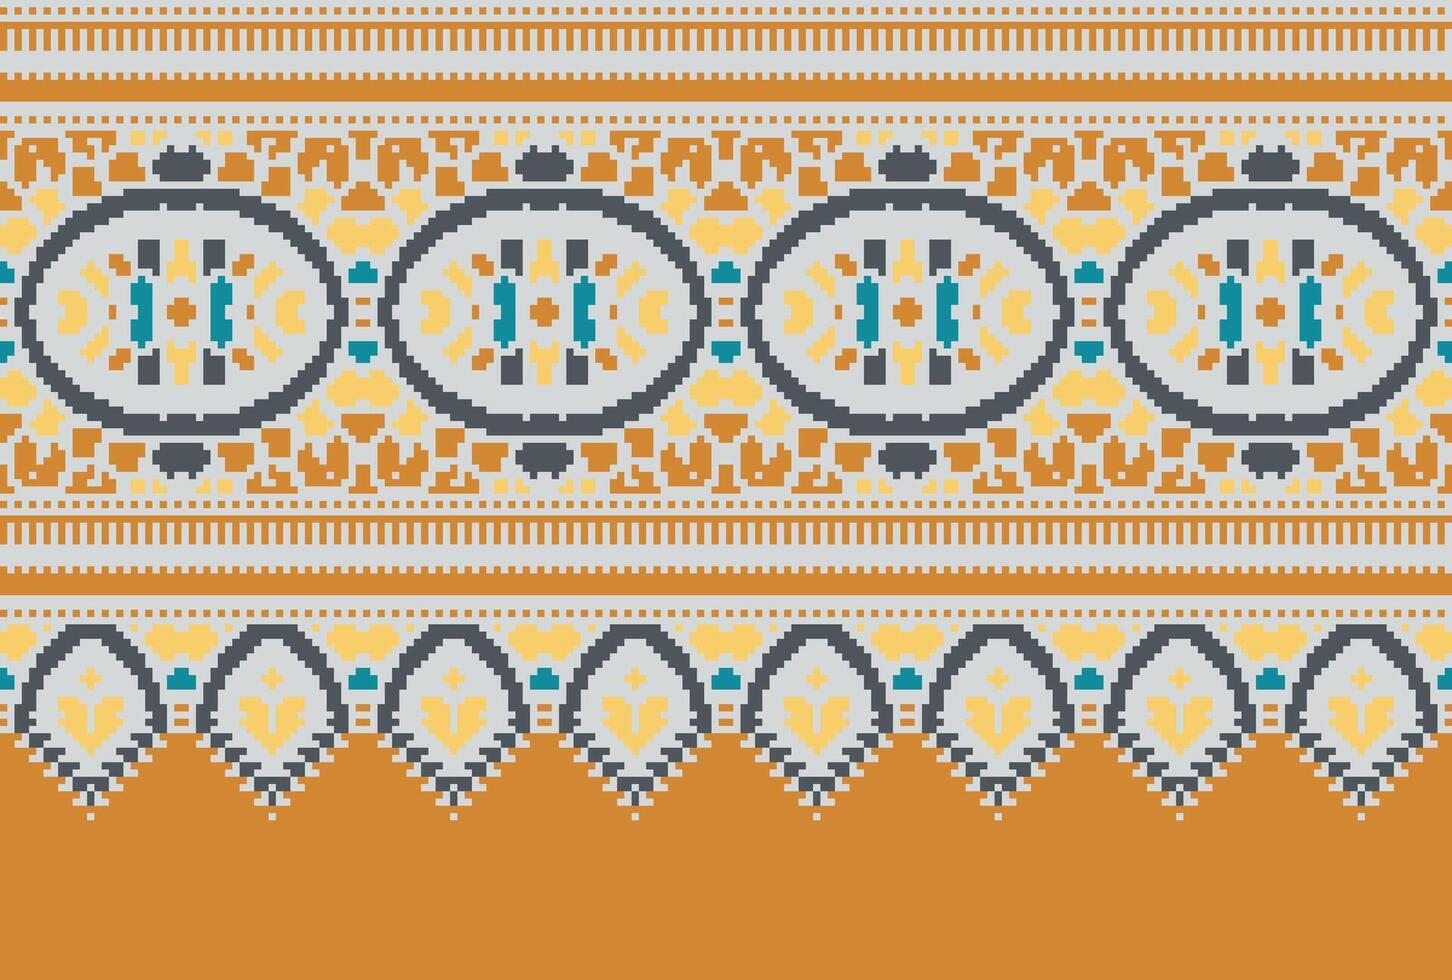 kruis steek patroon met bloemen ontwerpen. traditioneel kruis steek handwerk. meetkundig etnisch patroon, borduurwerk, textiel versiering, kleding stof, hand- gestikt patroon, cultureel stiksels pixel kunst. vector